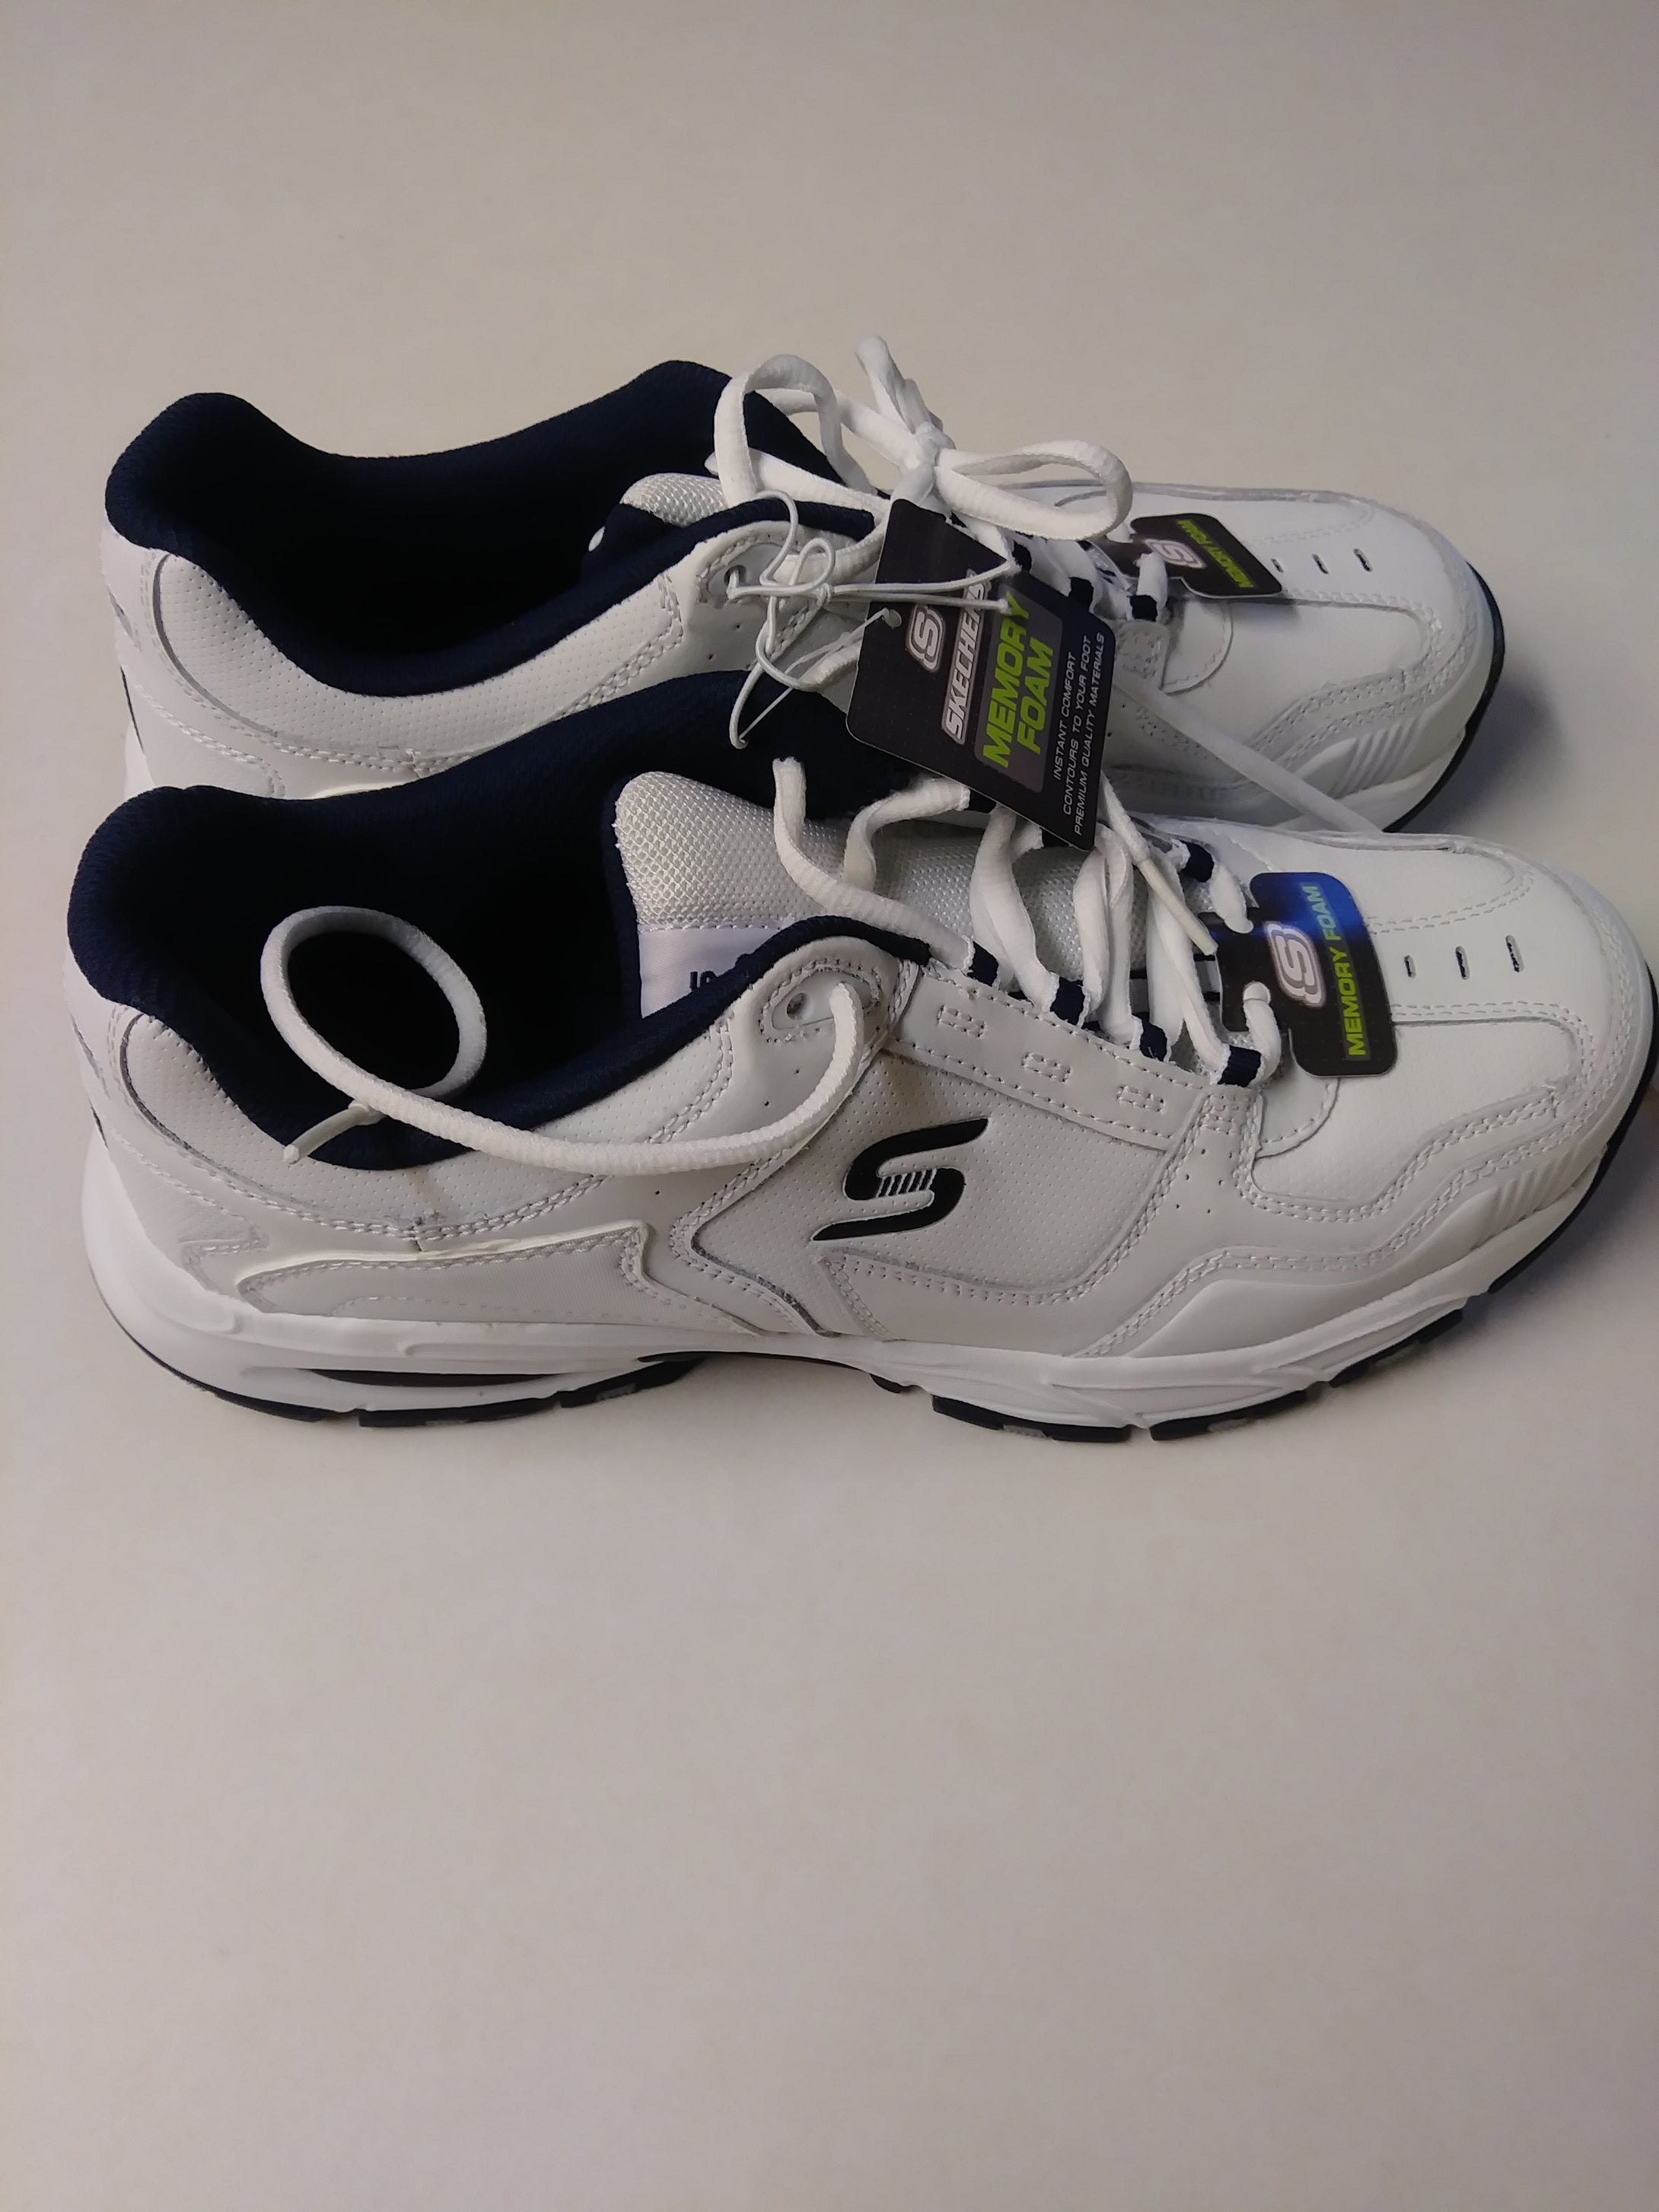 skechers tennis shoes with memory foam